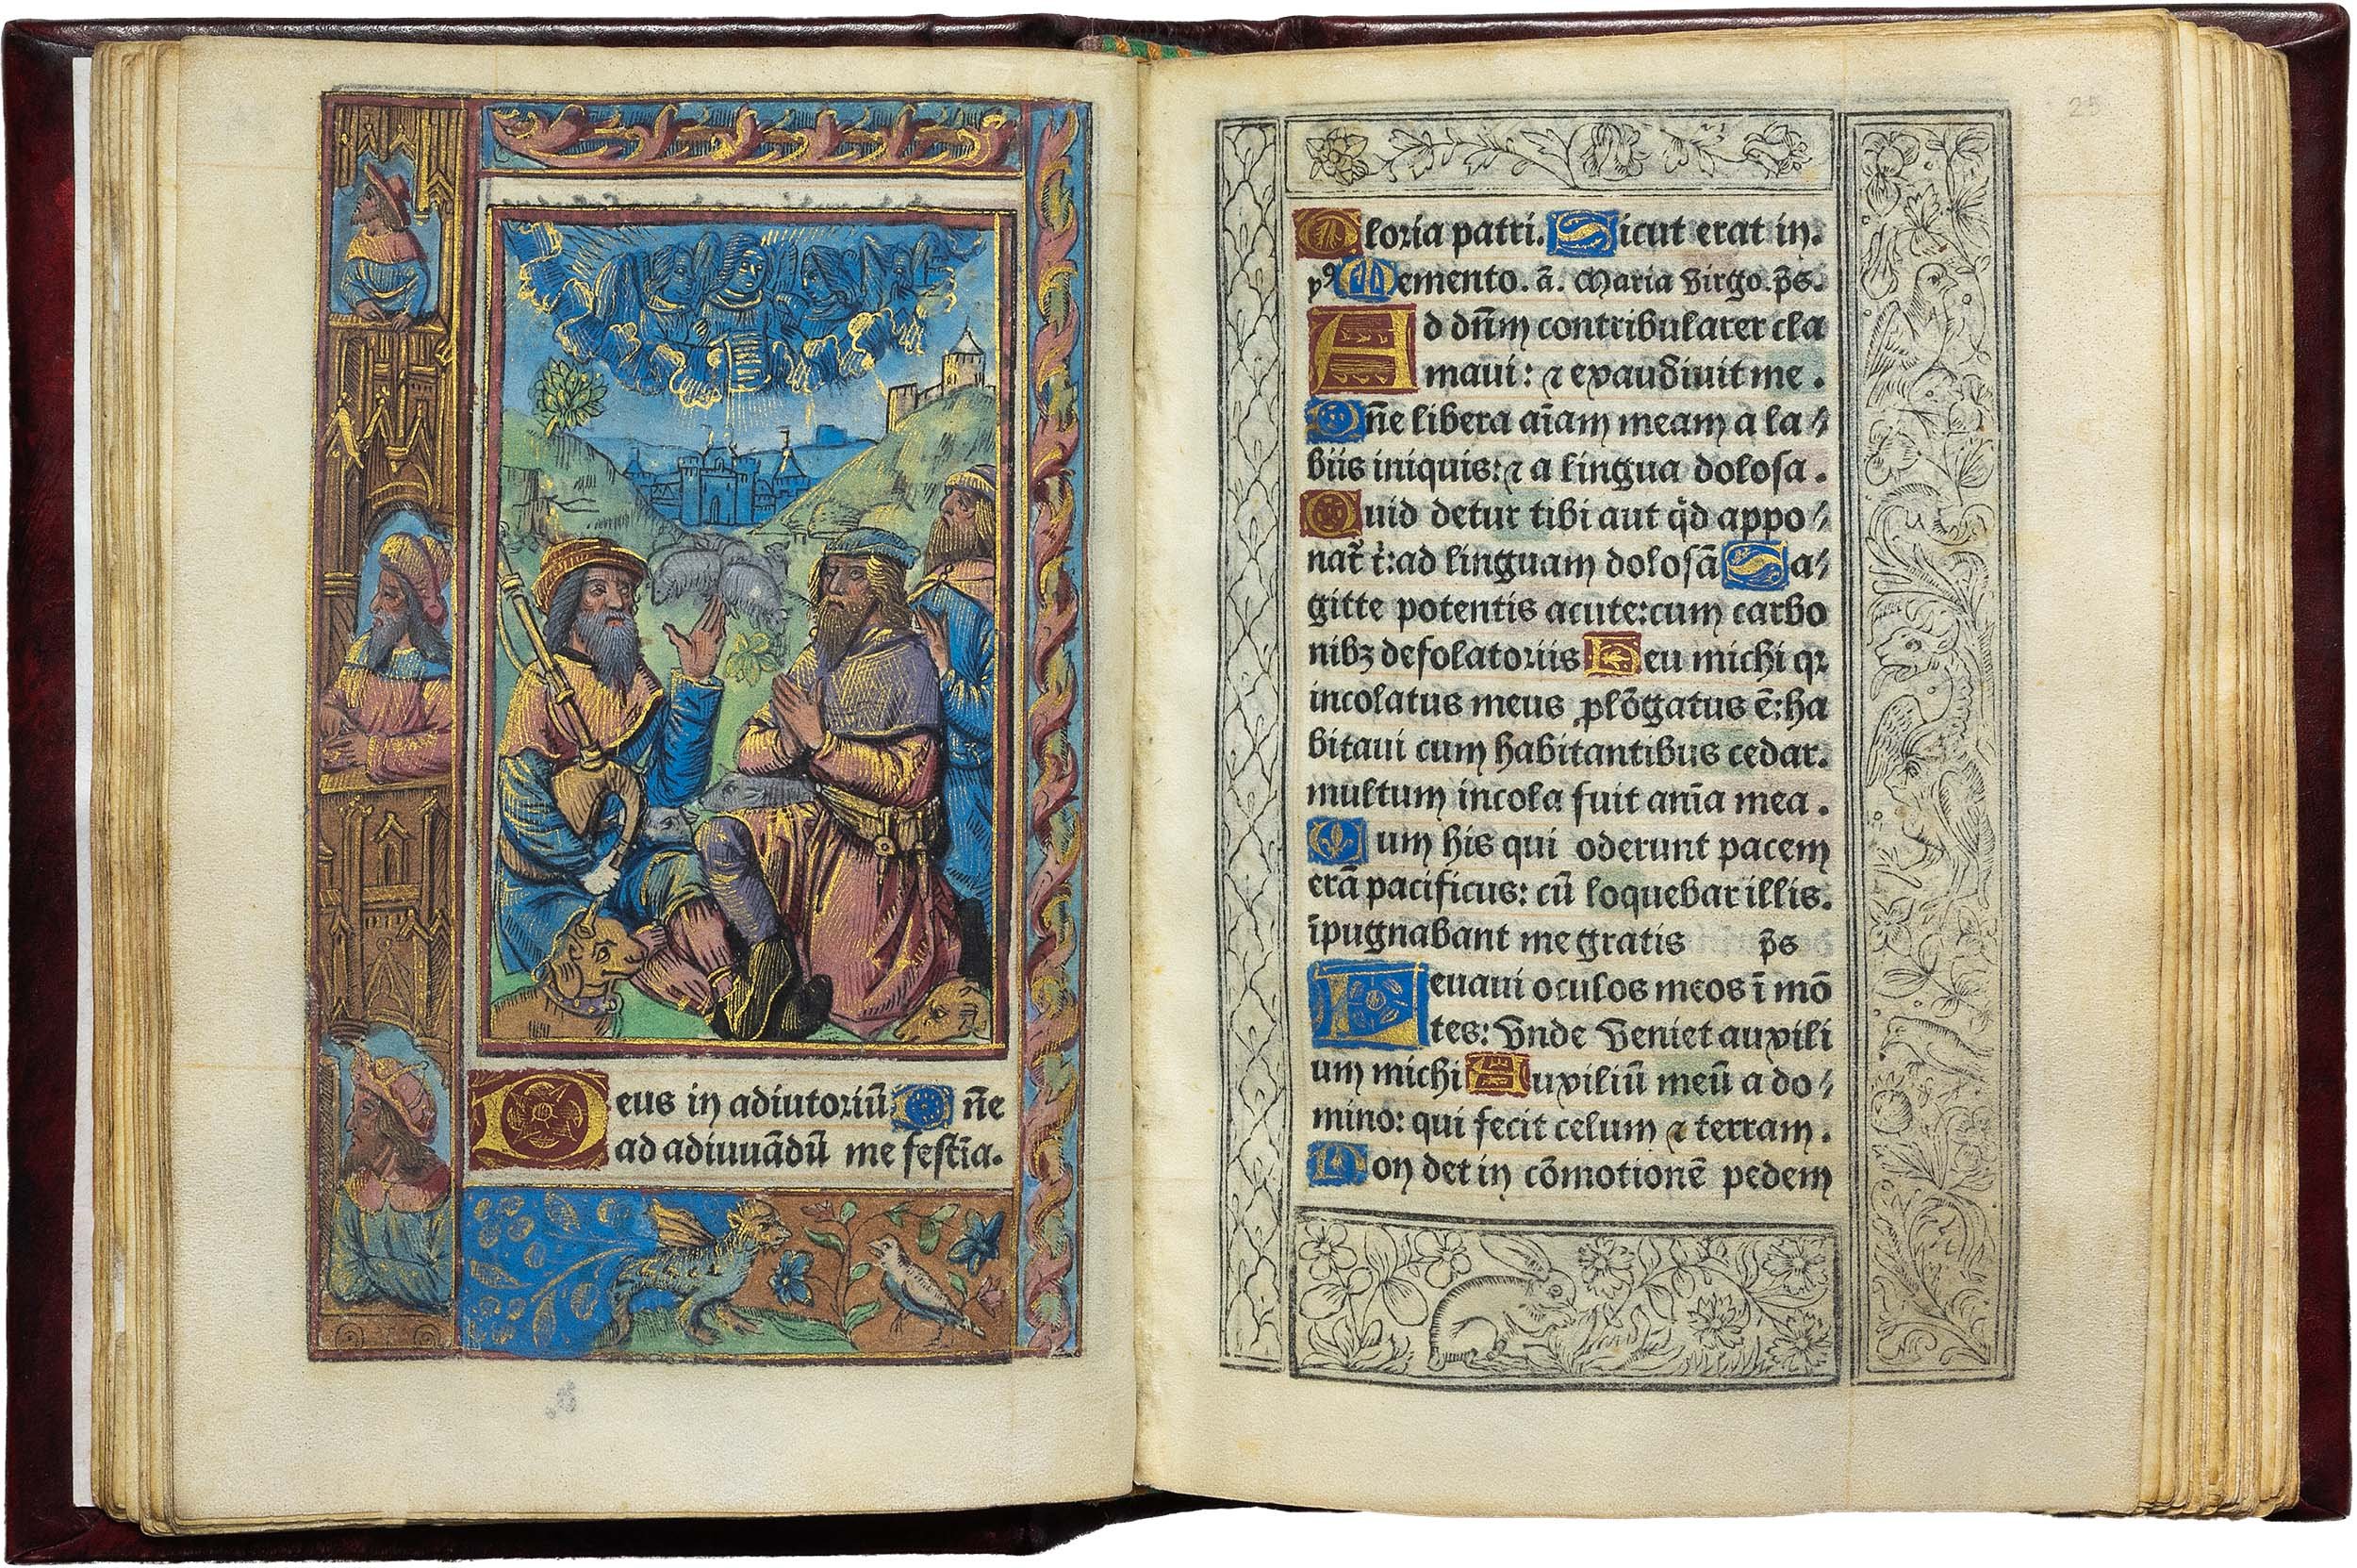 horae-bmv-early-printed-book-of-hours-1487-dupre-26.jpg